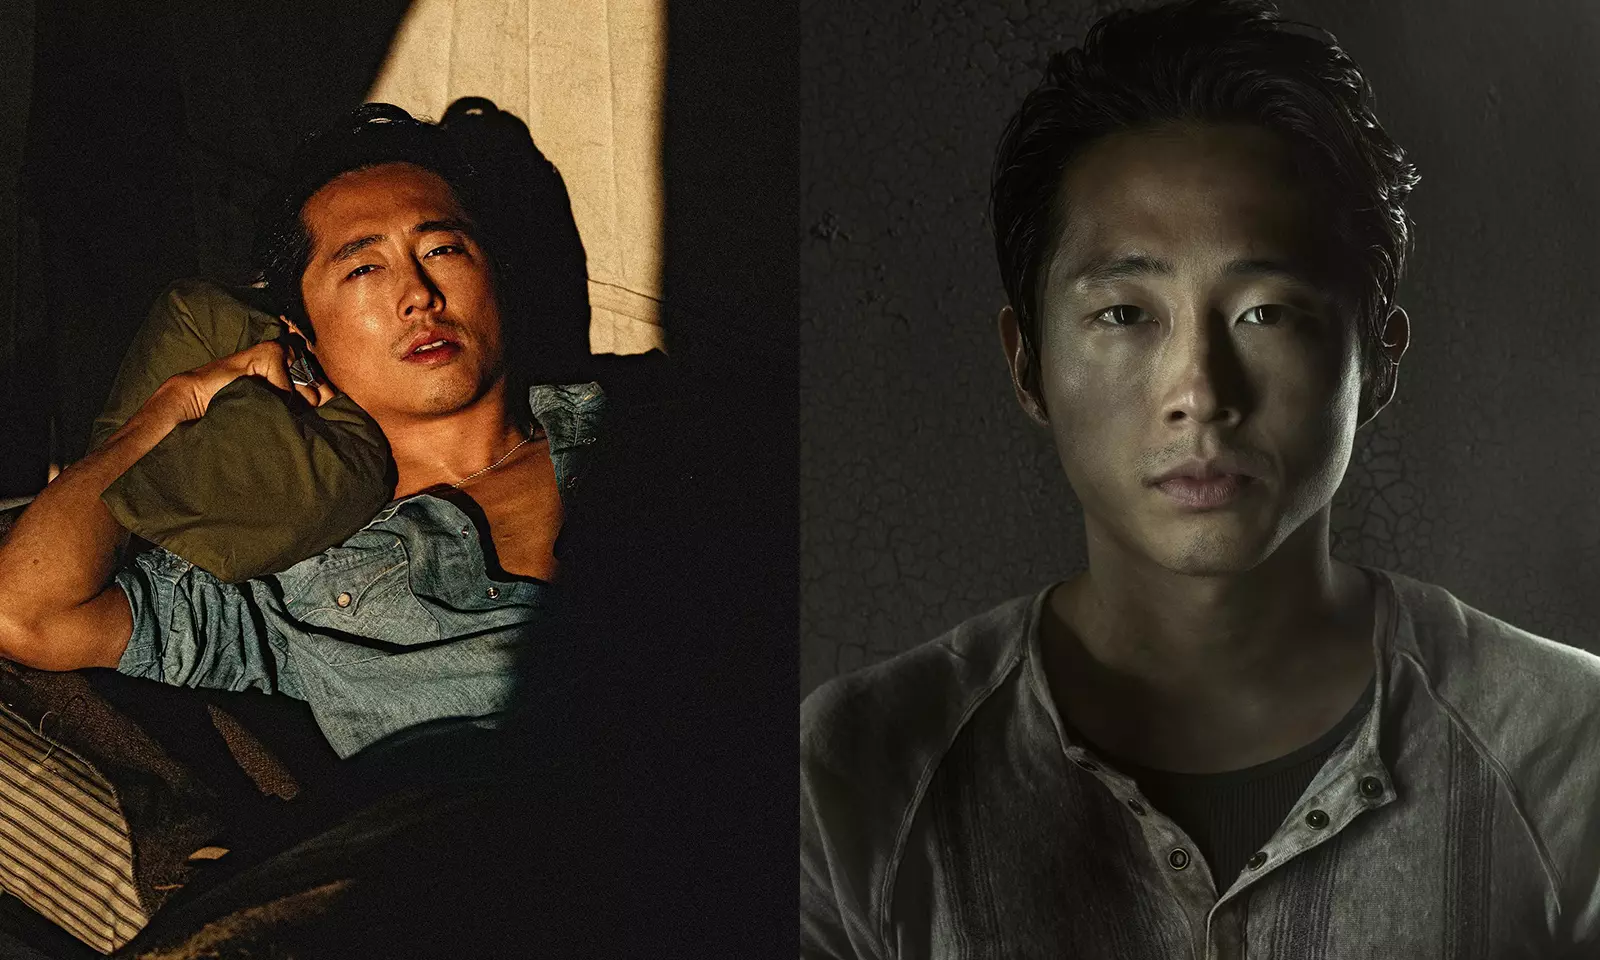 Montagem com foto de ensaio fotográfico de Steven Yeun e imagem promocional de Glenn Rhee em The Walking Dead.